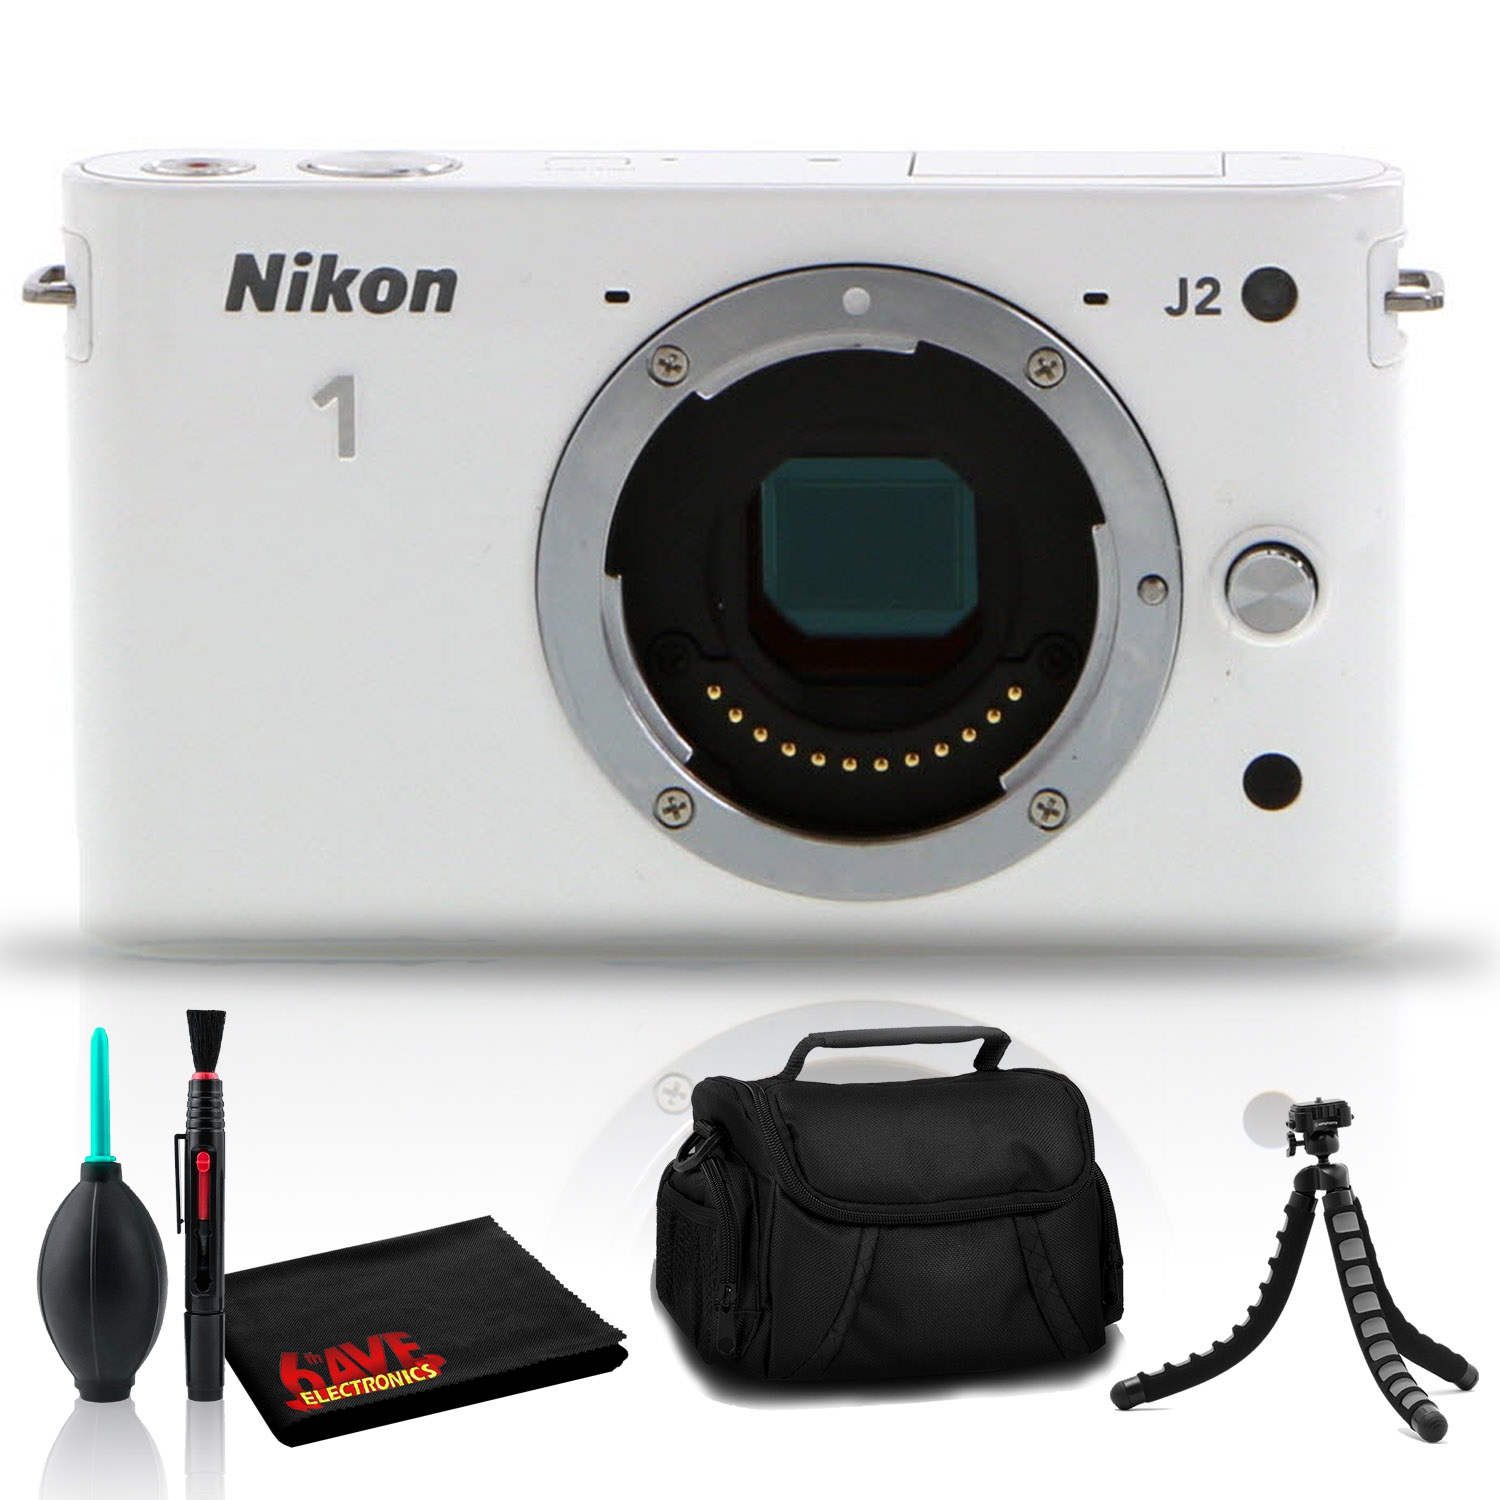 Nikon 1 J2 Camera Body (White) (Intl Model) Includes Carry Case and 12" Tripod